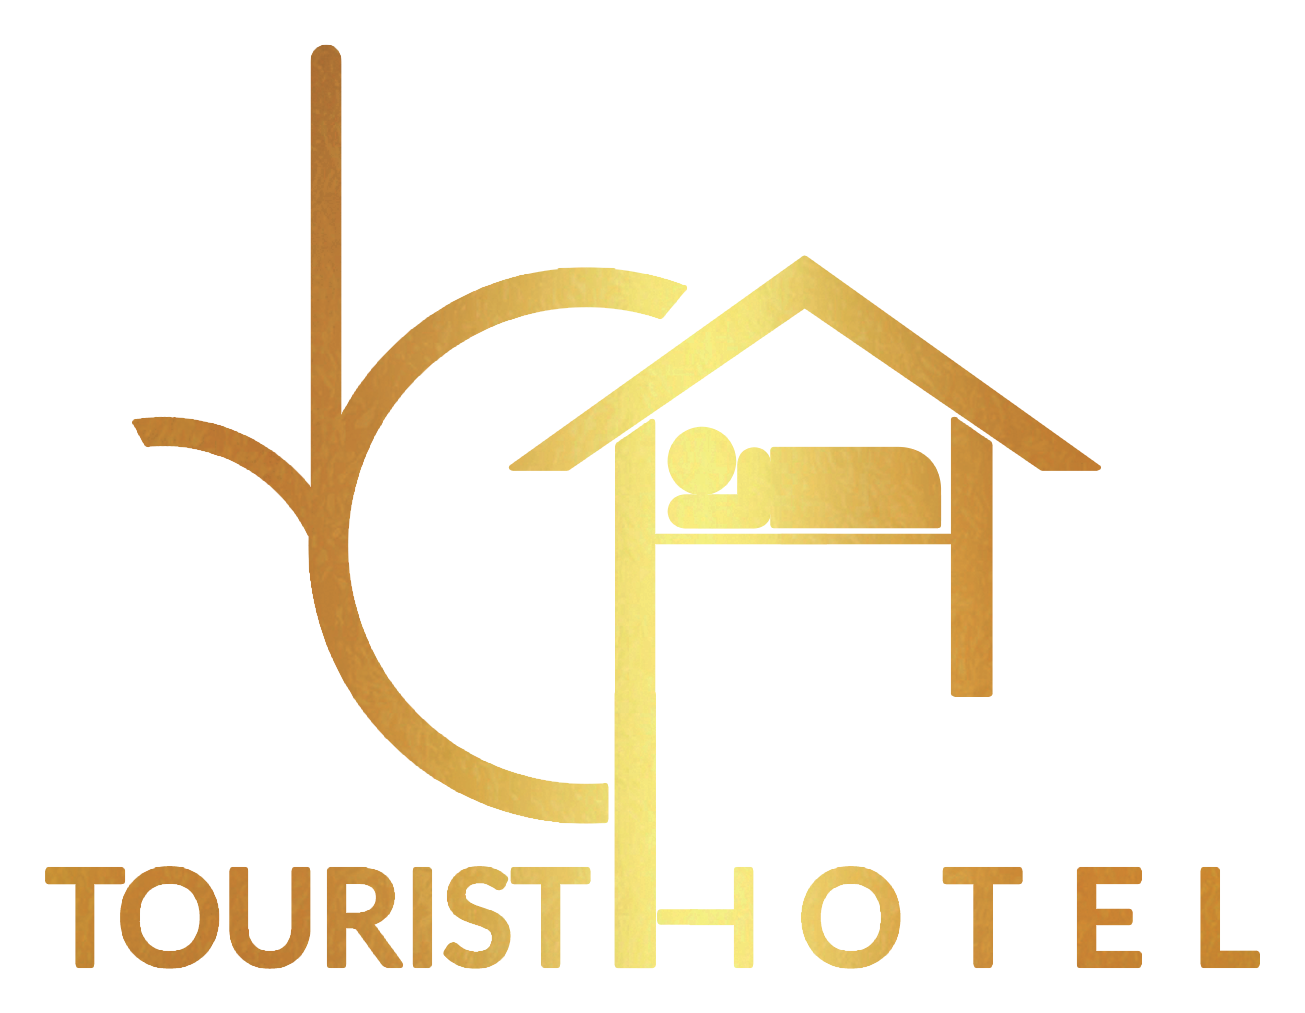 cairo best hotels - hotel in cairo - cairo hotels - tourist hotel cairo egypt